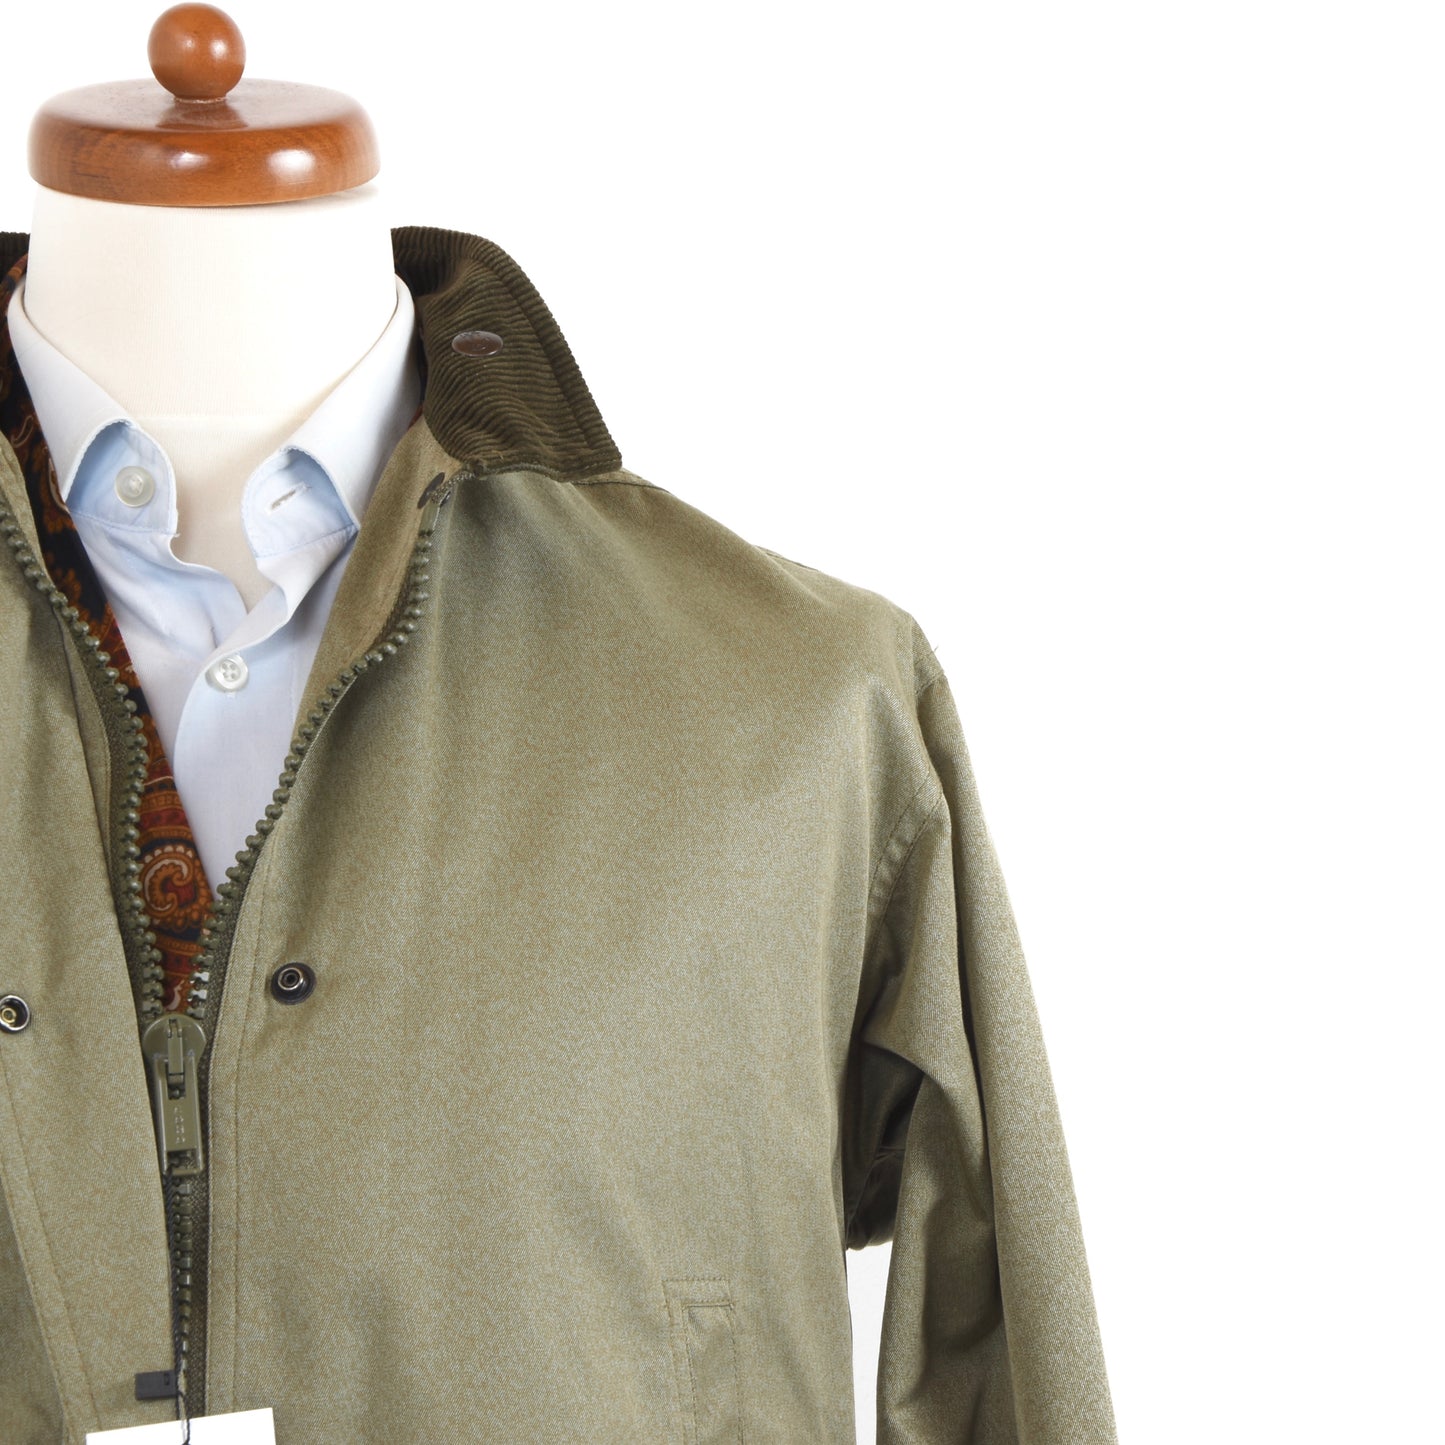 Vintage L'Esquimau Field Jacket Size 46 - Green